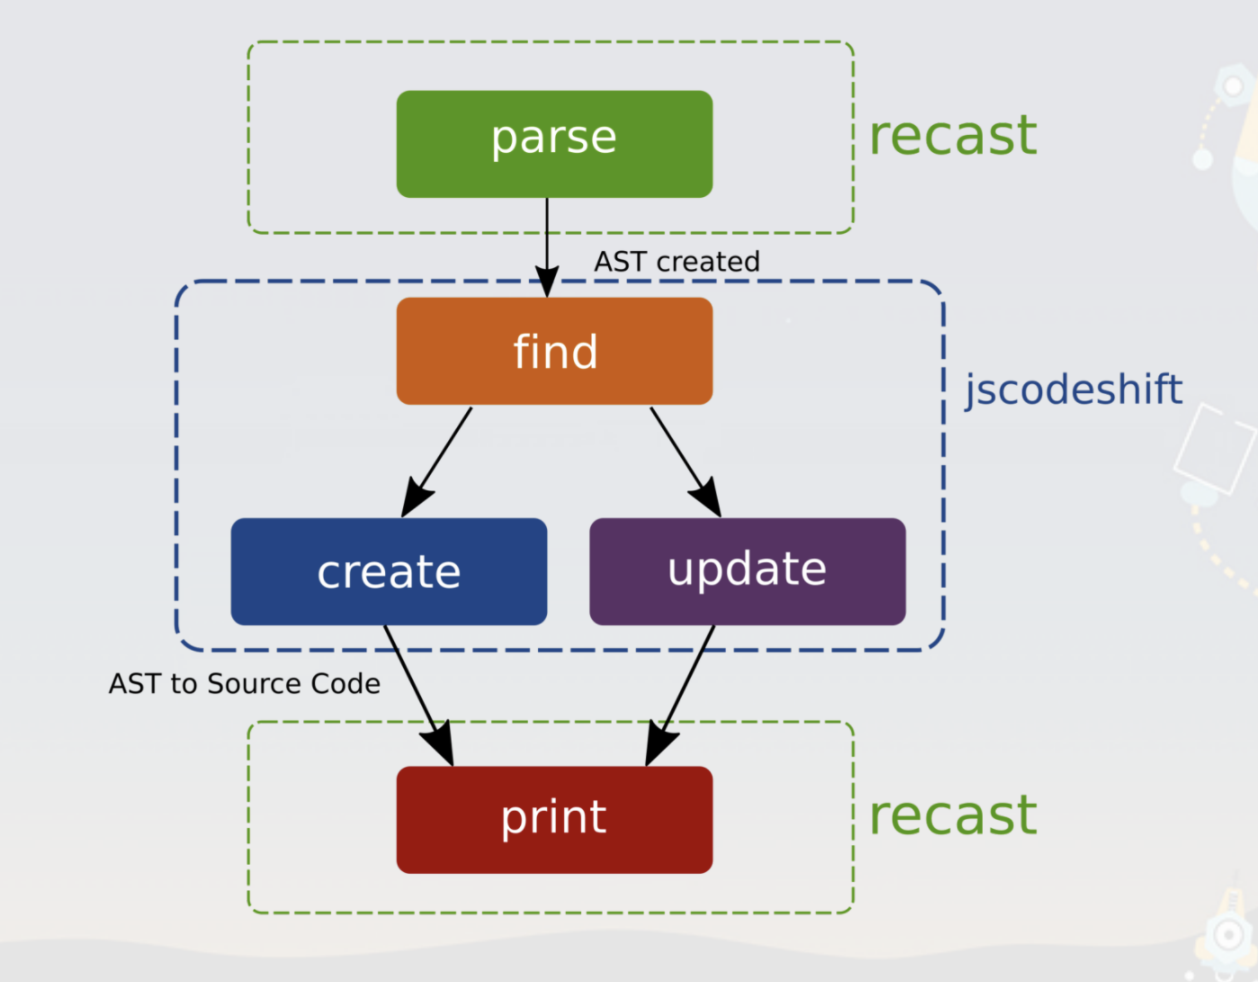 jscodeshift and recast relation image